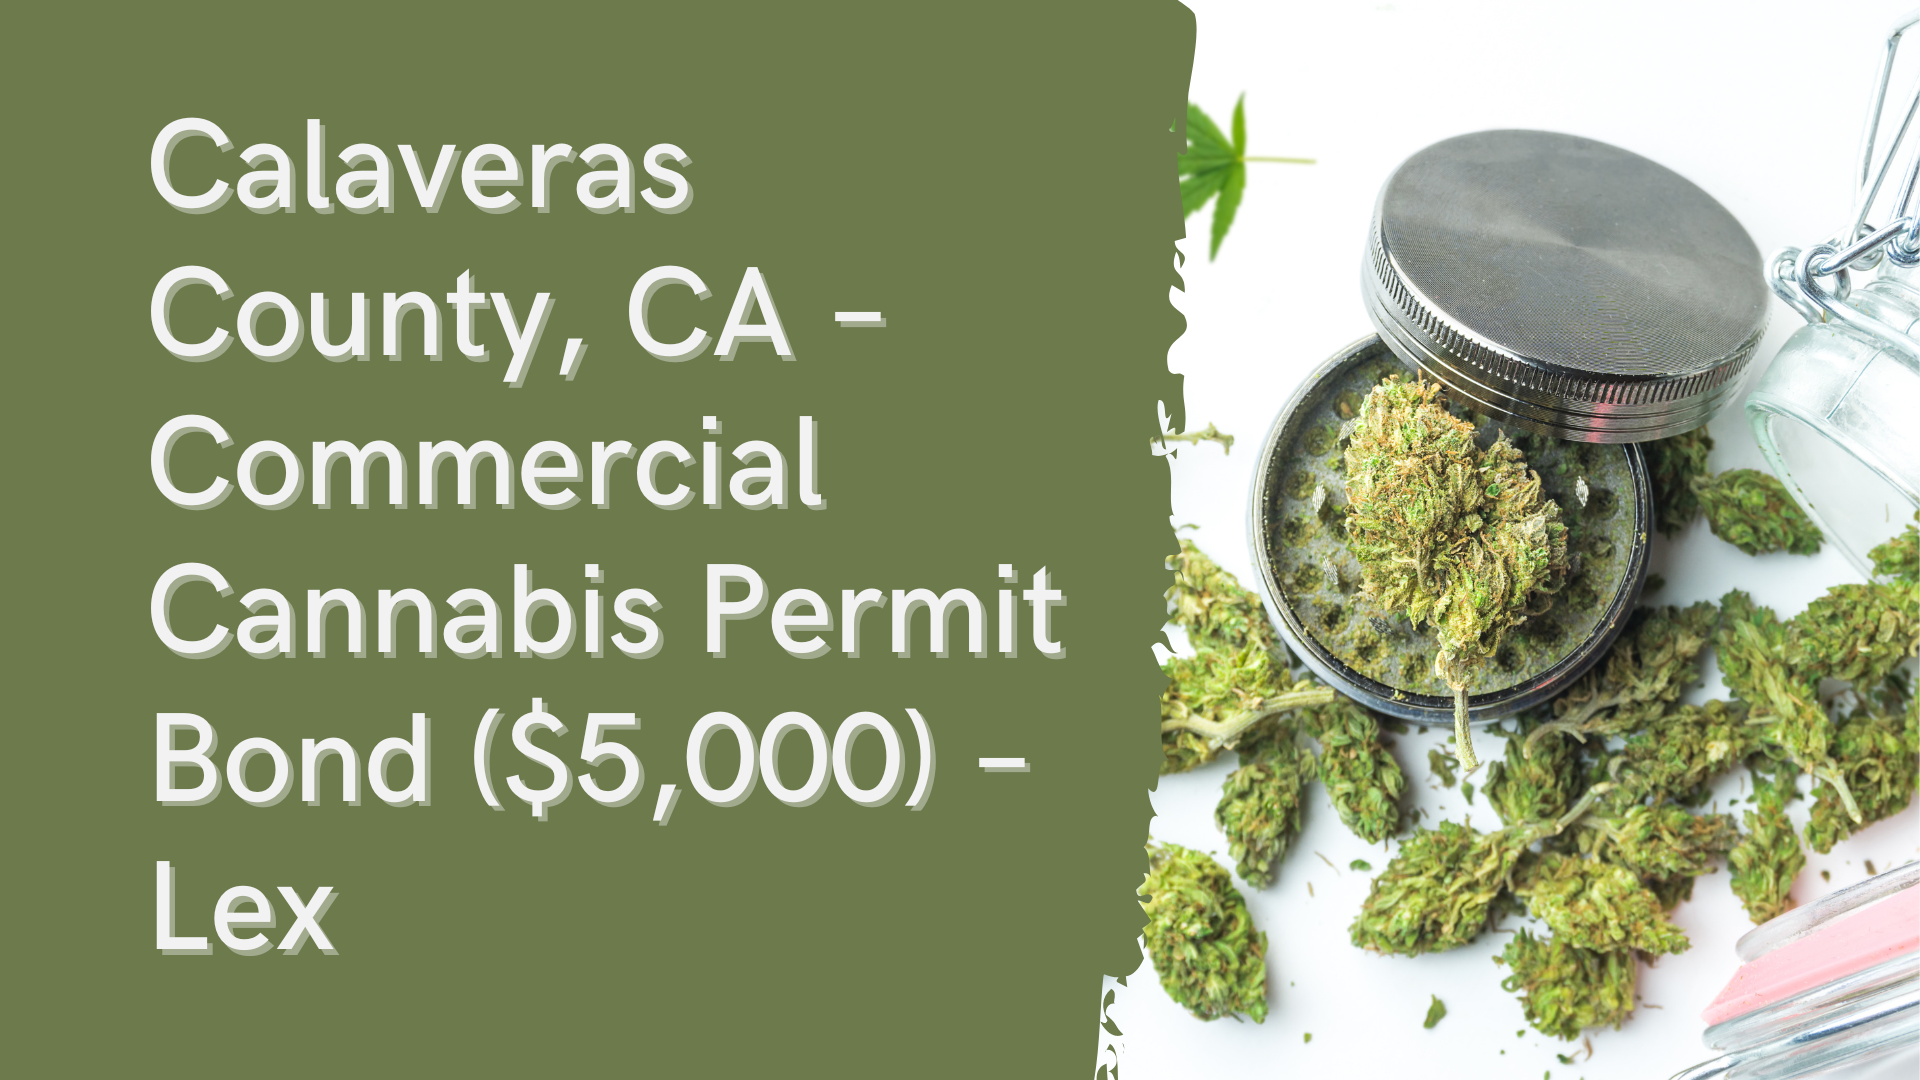 Surety Bond-CA – Calaveras County, CA – Commercial Cannabis Permit Bond ($5,000) – Lex